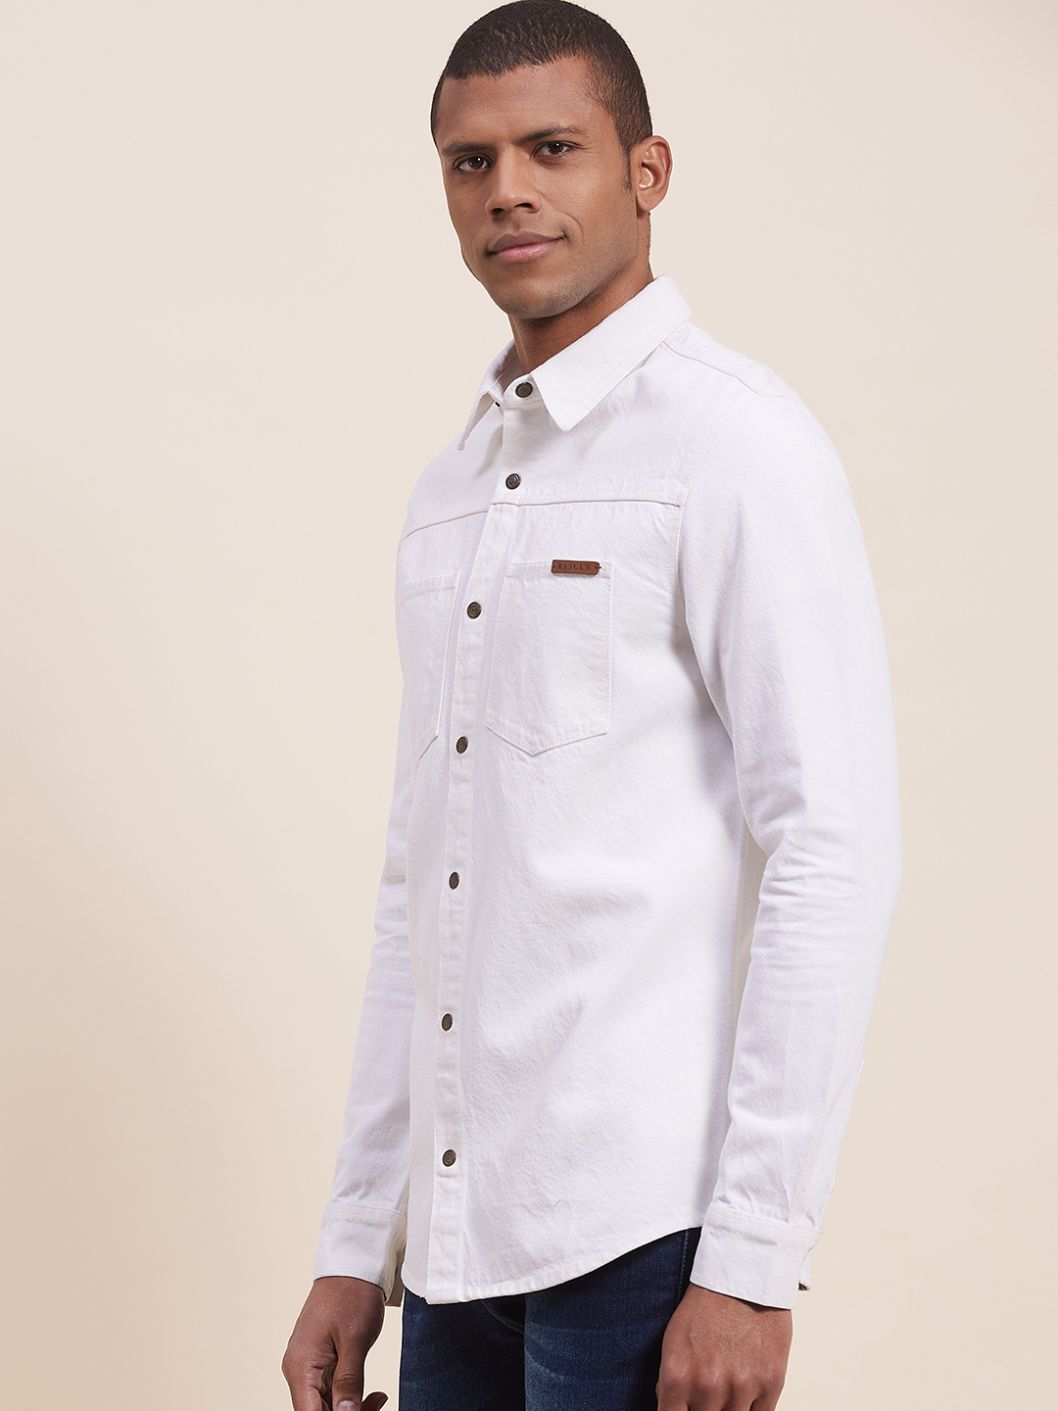 Buy Men's White Denim Jacket Shirt Online at Sassafras – SASSAFRAS